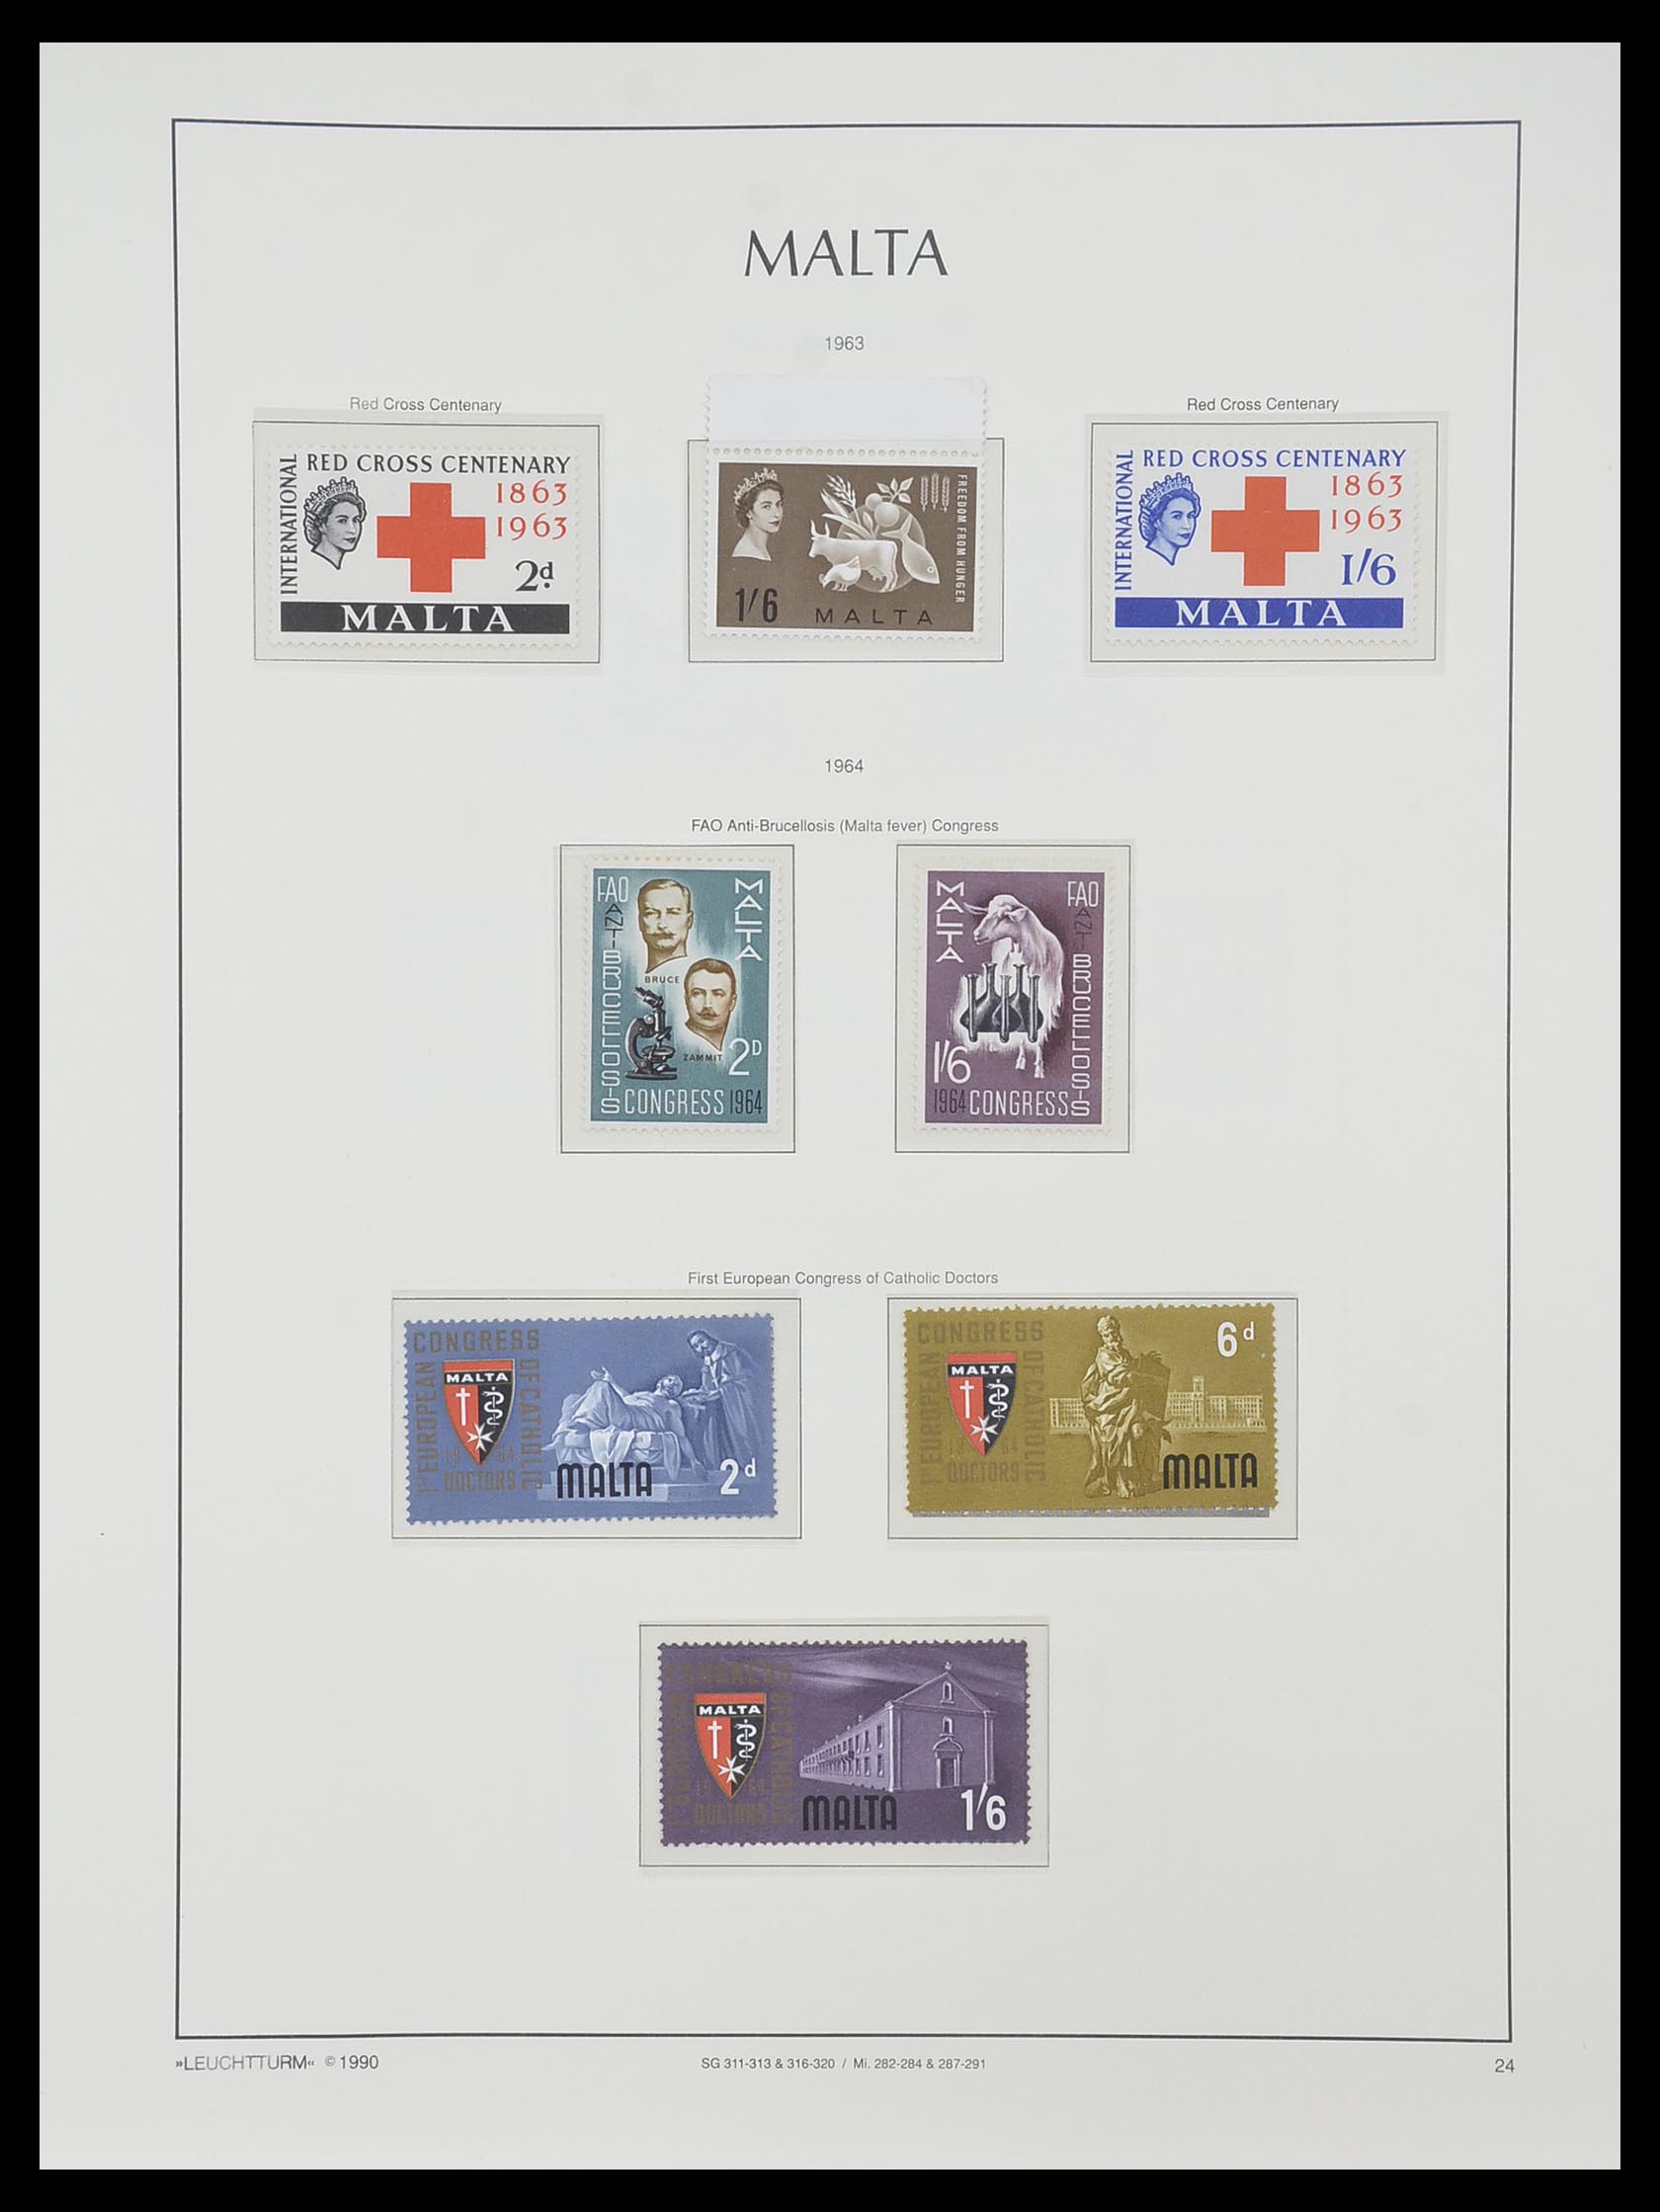 33968 029 - Stamp collection 33968 Malta 1861-2001.